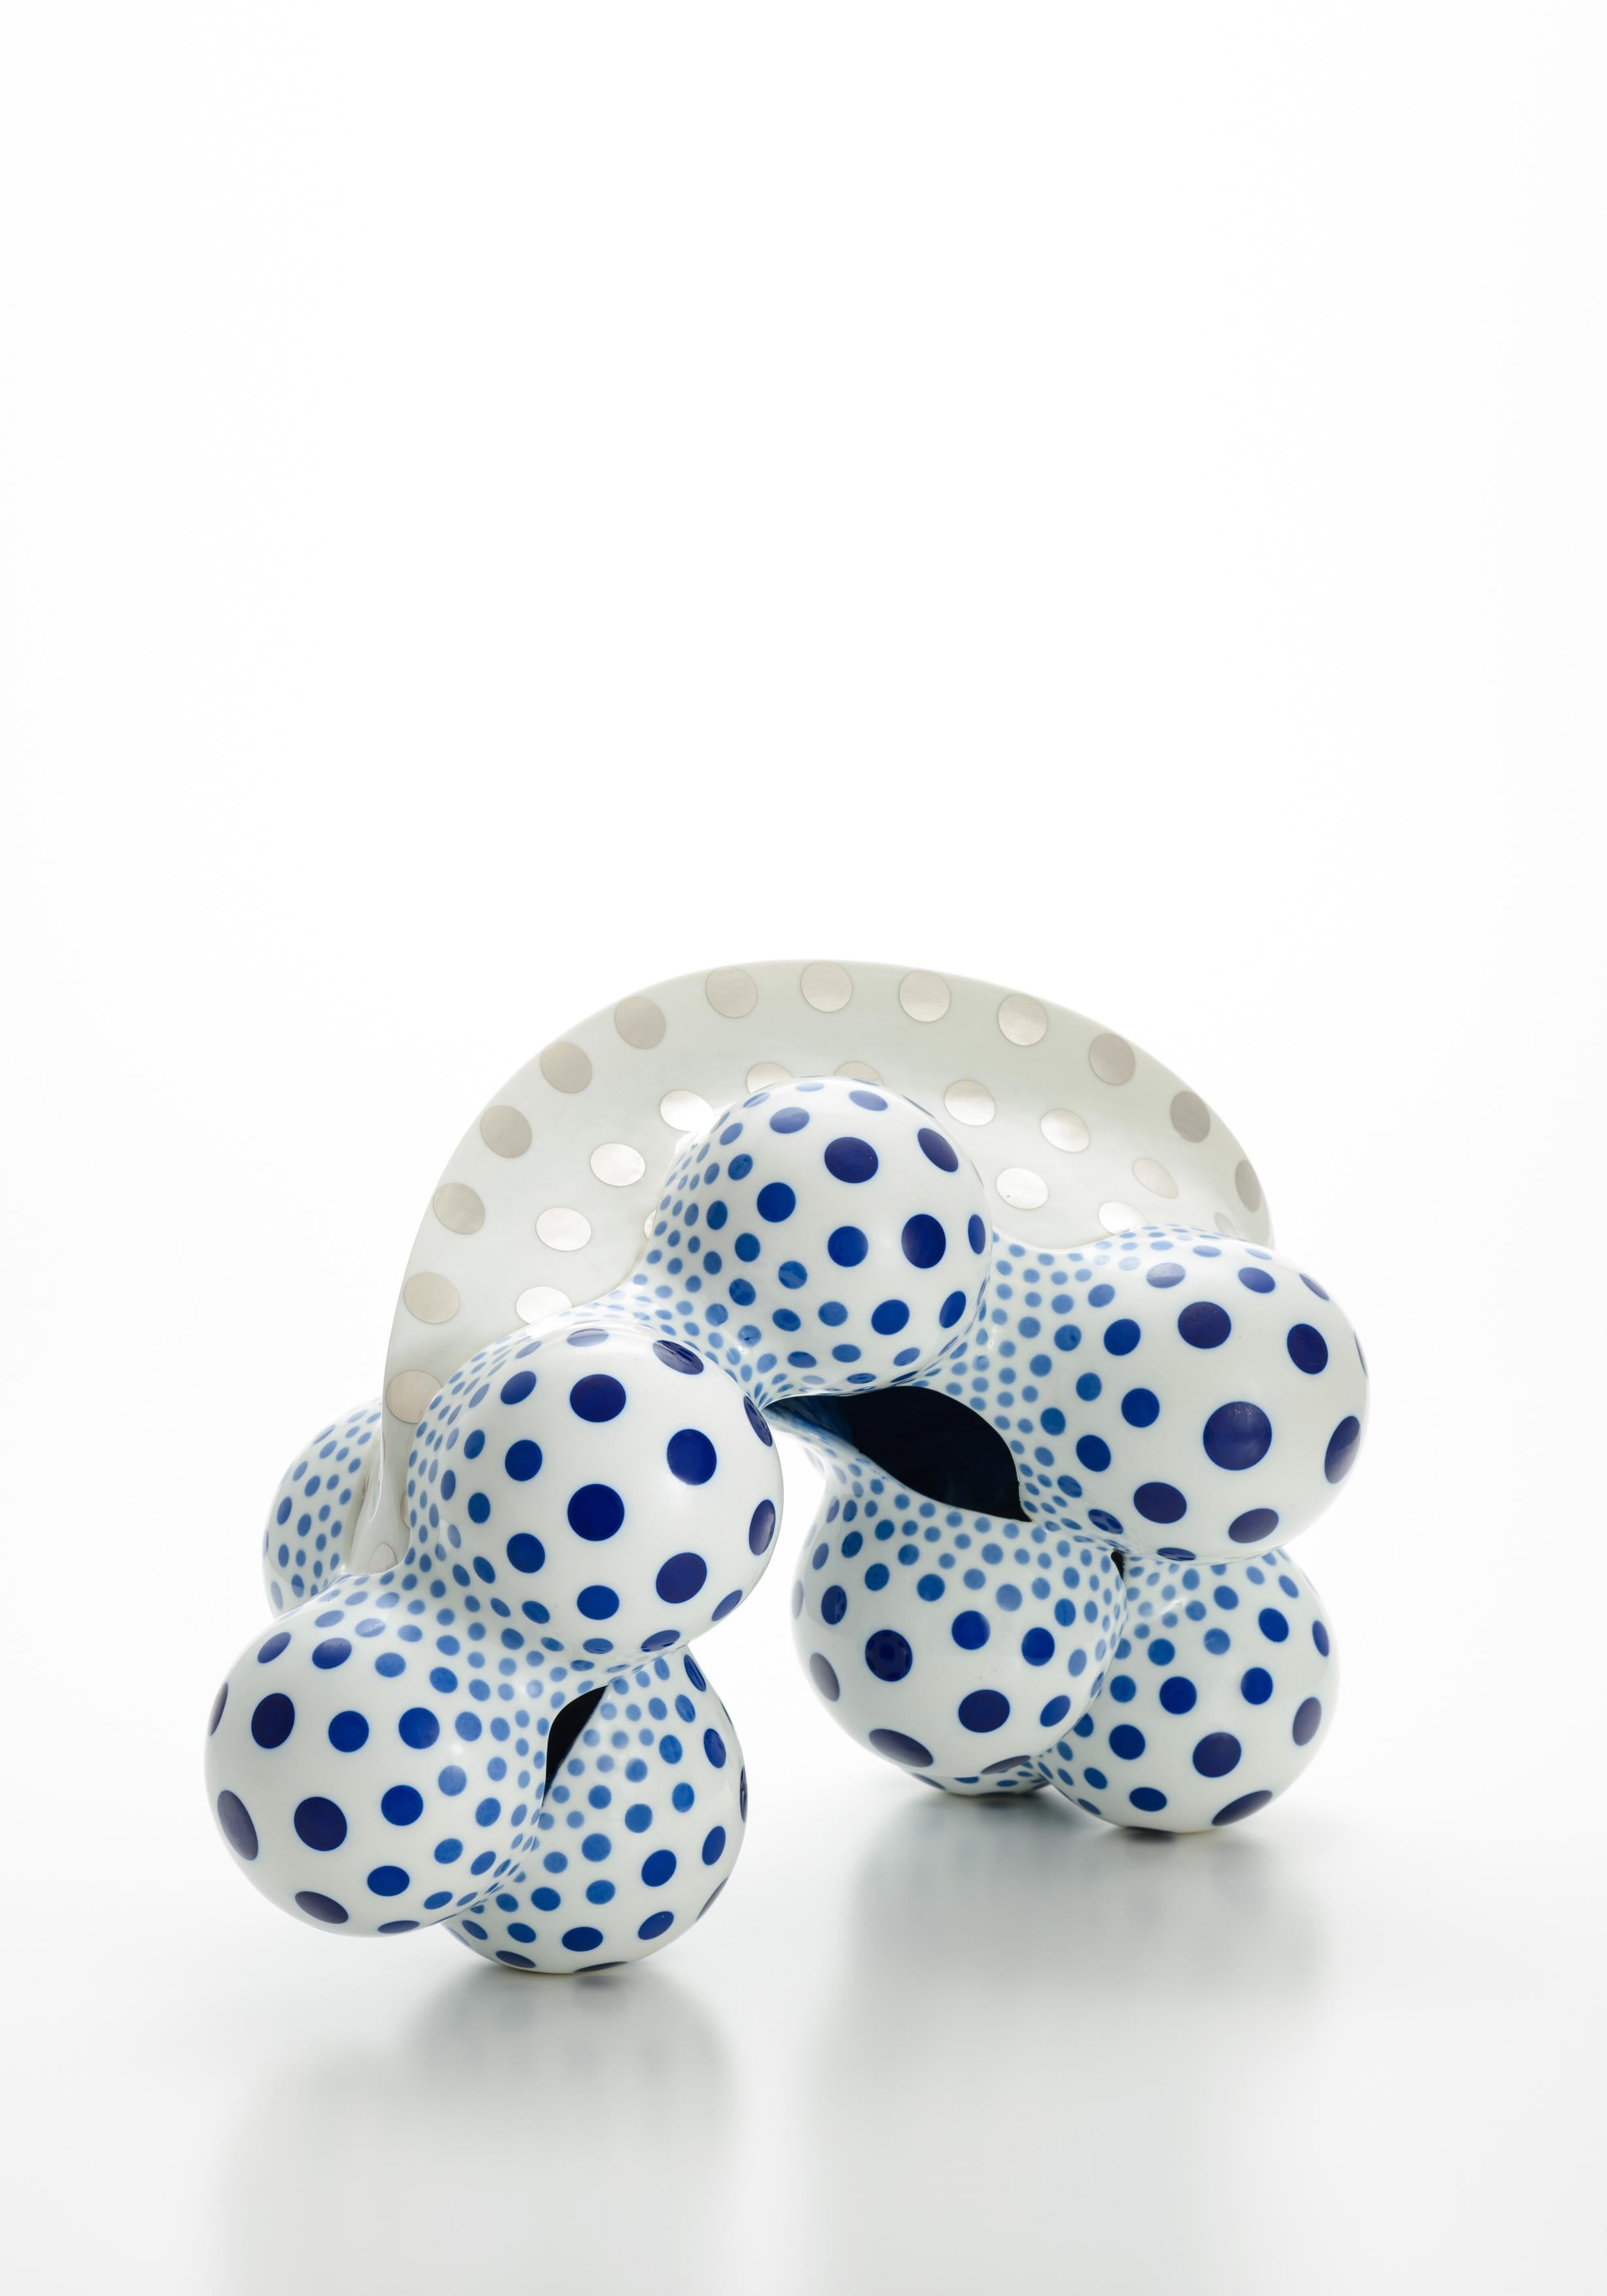 Harumi Nakashima Abstract Sculpture - "Proliferating Forms 13", Contemporary, Porcelain, Sculpture, Abstract, Design